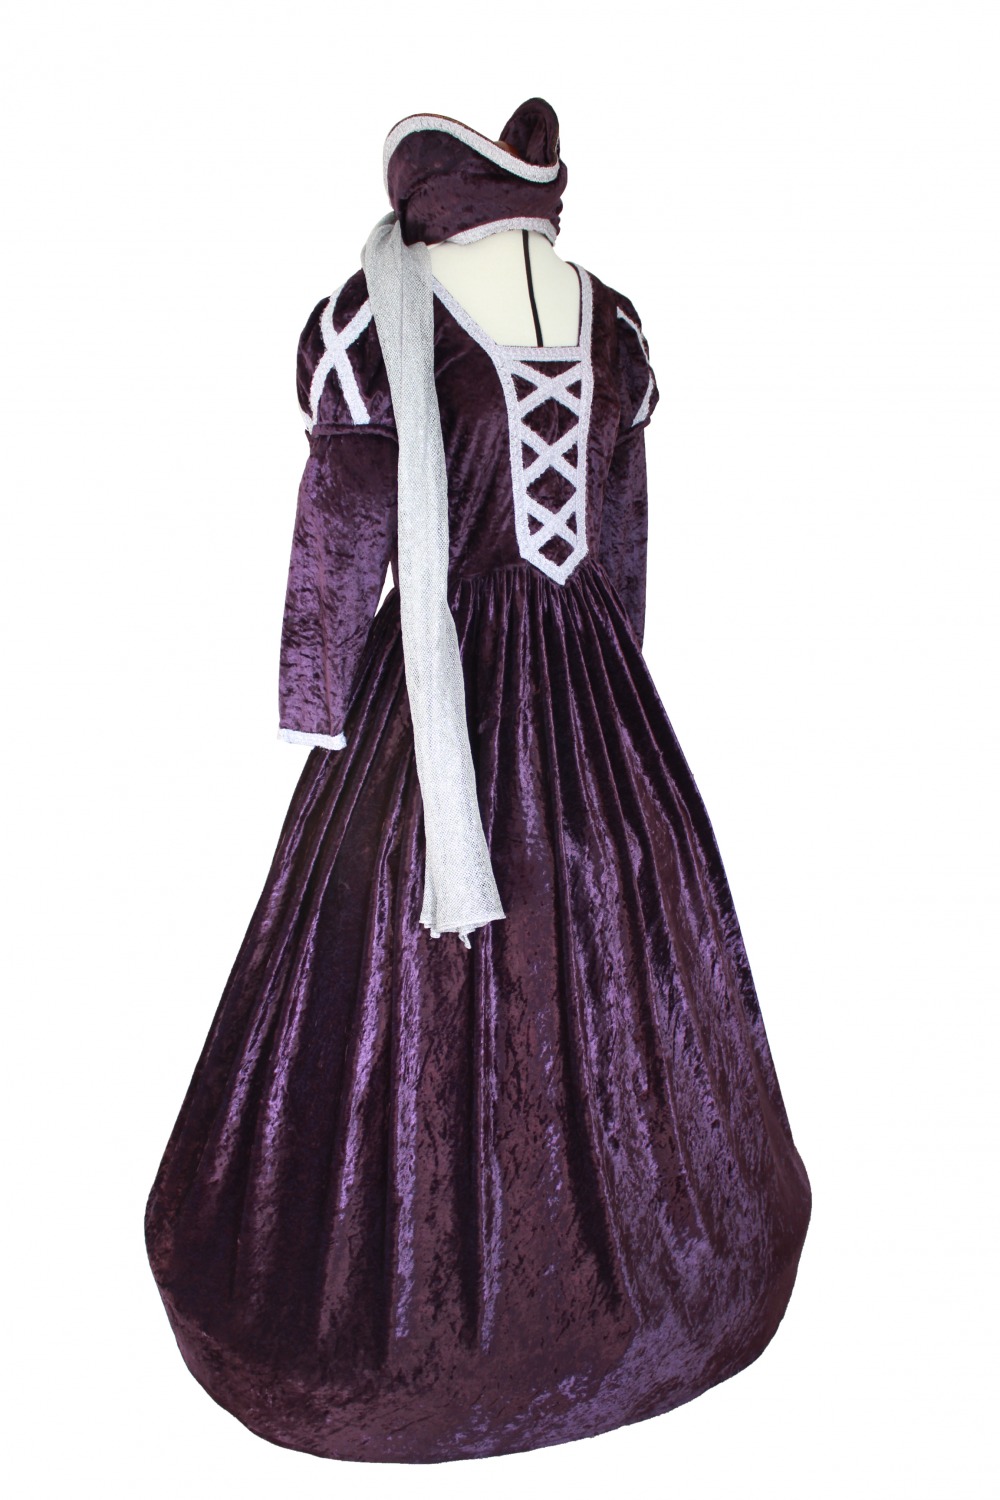 Ladies Petite Medieval Tudor Elizabethan Costume And Headdress Size 12 - 14 Image